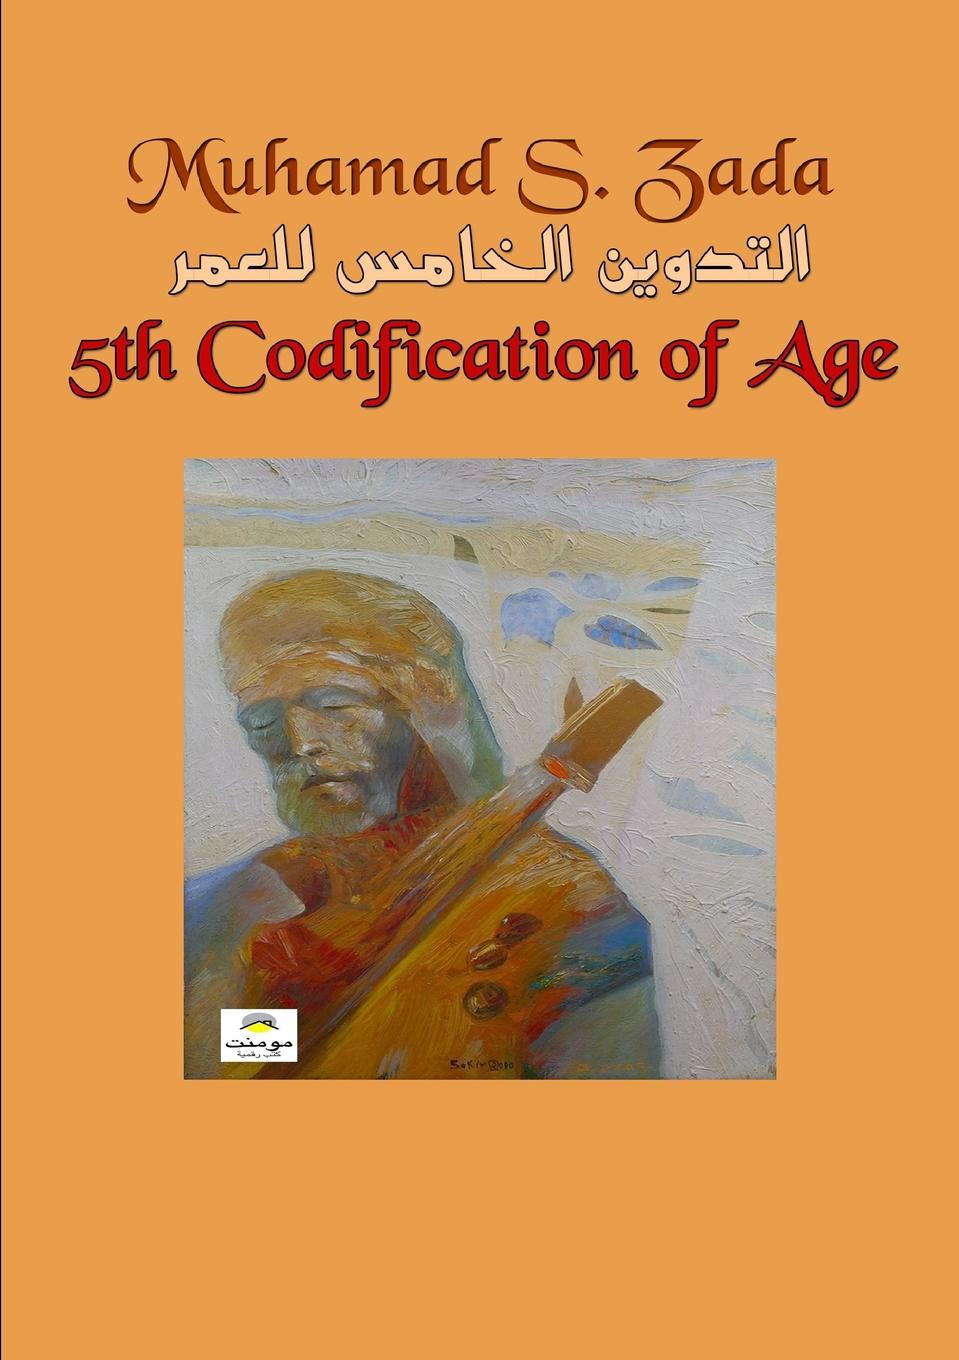 O. U. U. U. O. U., Muhamad S. Zada 5th Codification of Age -